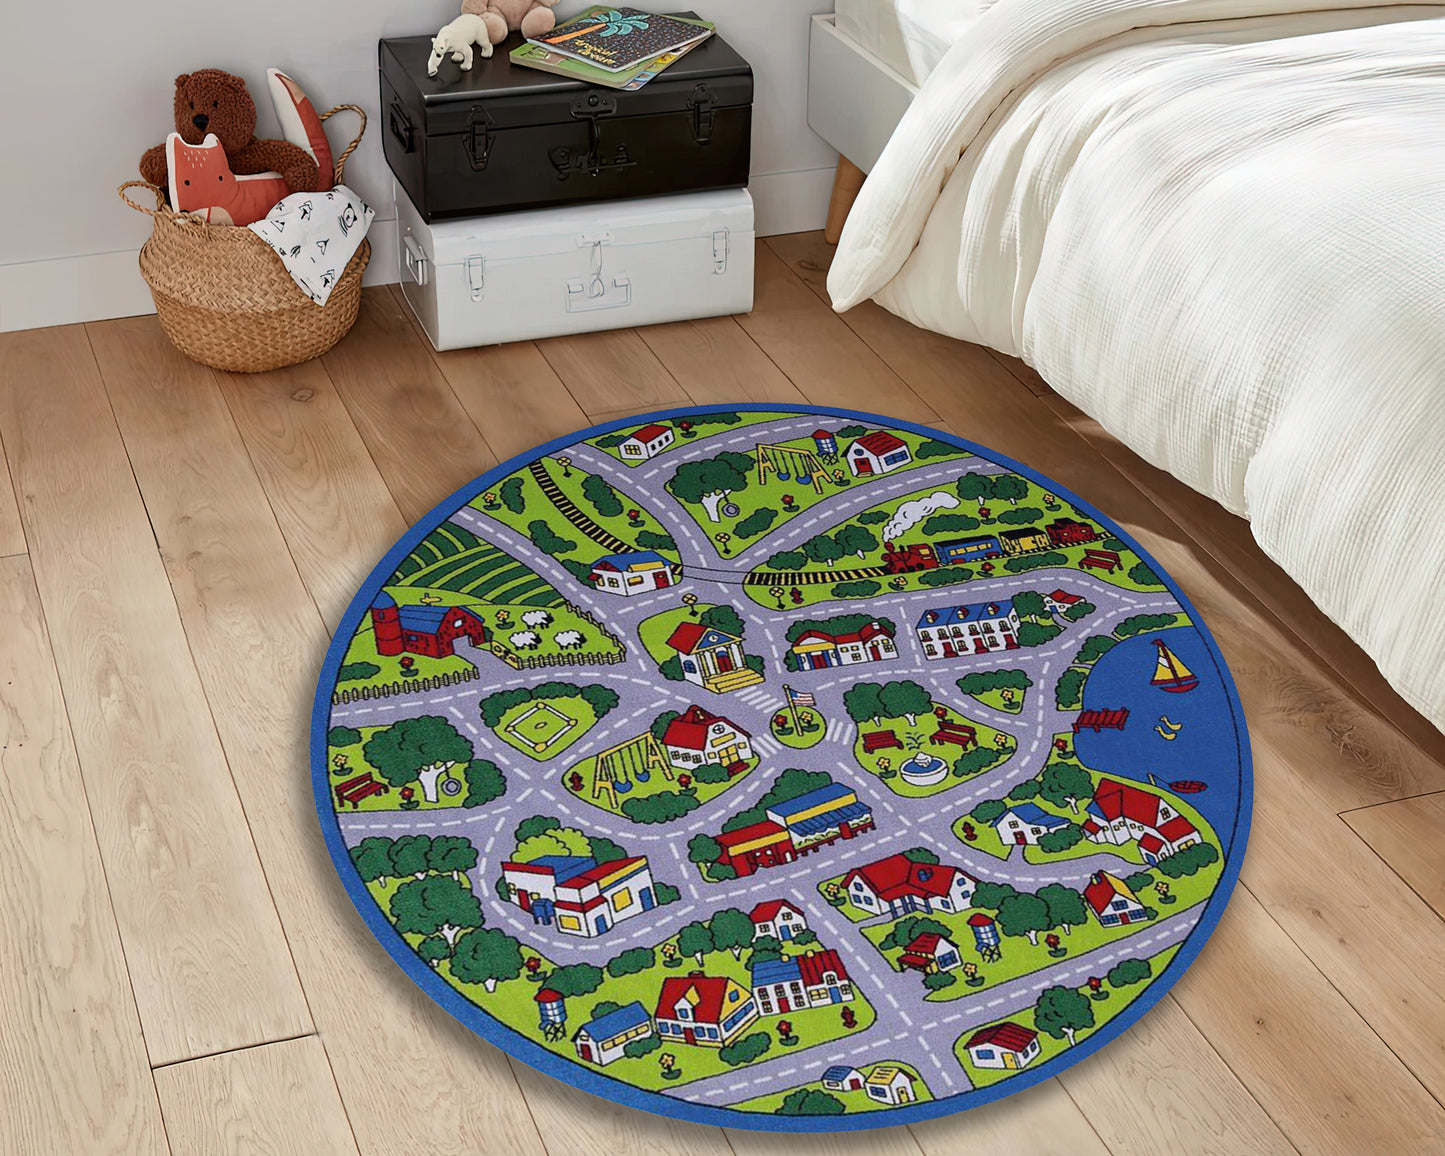 City Map Themed Rug, Kids Room Carpet, Nursery Play Mat, Baby Room Décor, Baby Gift